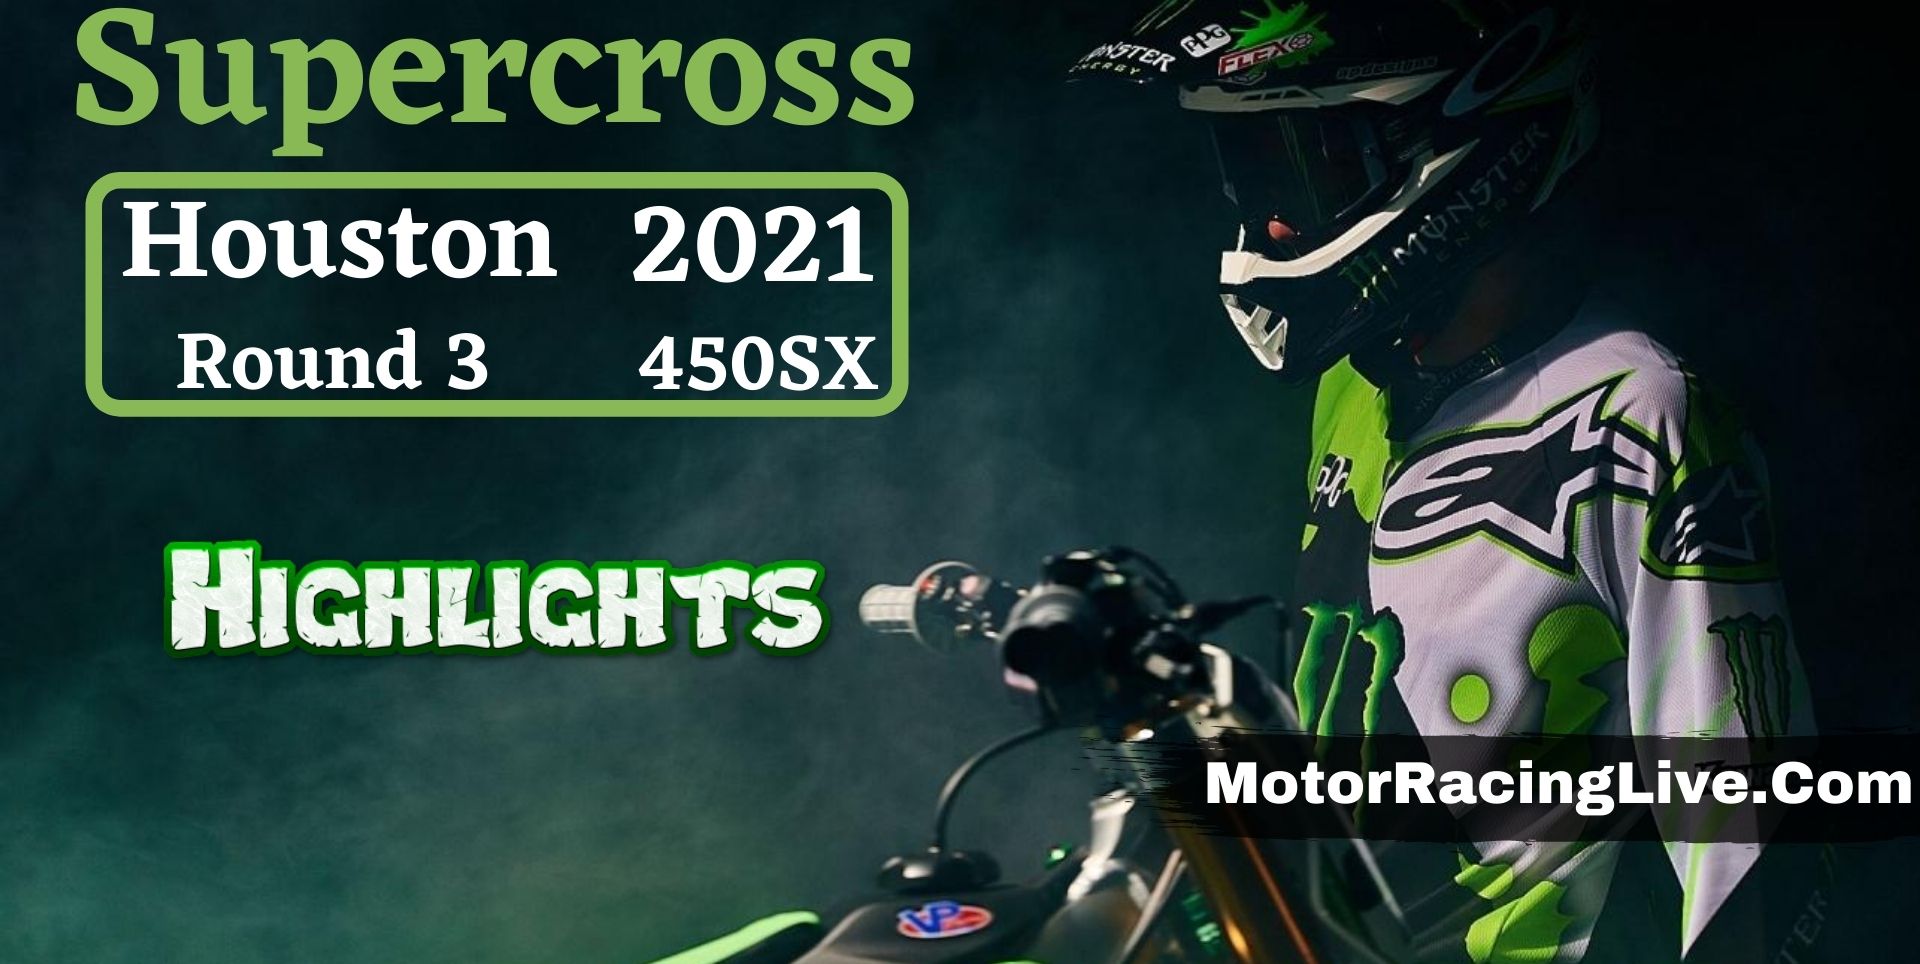 Houston Round 3 450SX Highlights 2021 Supercross